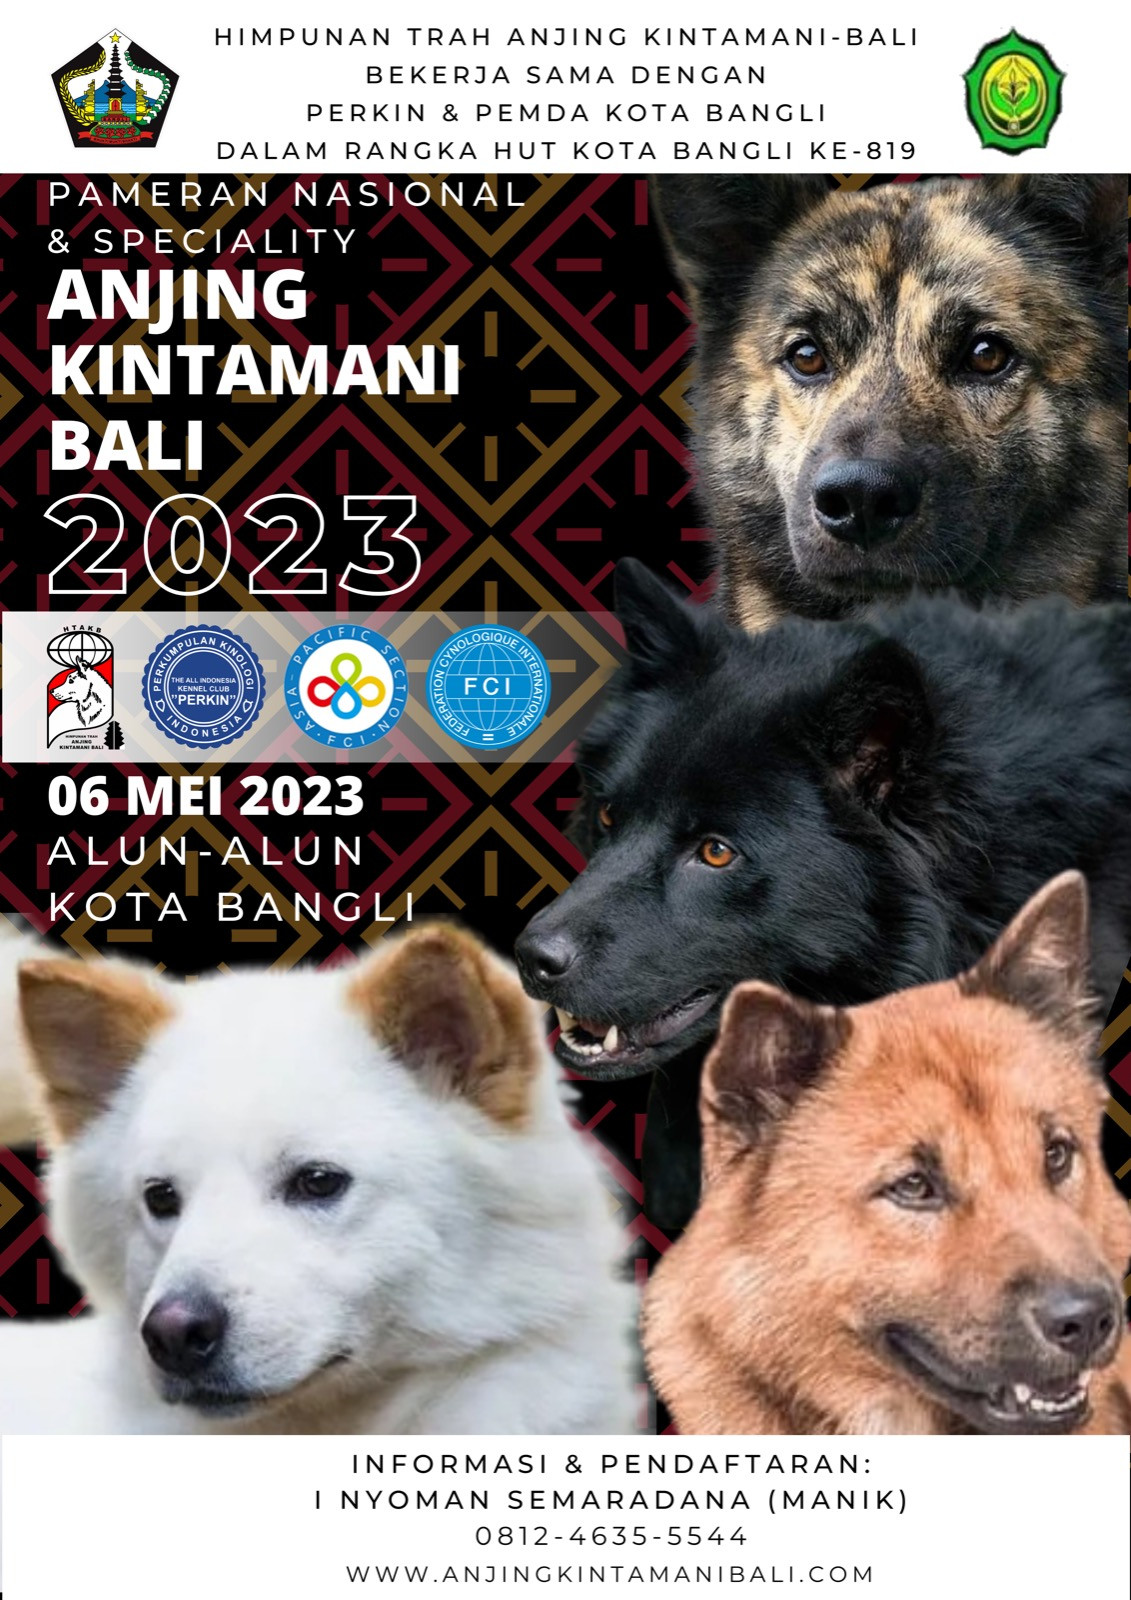 Pameran Nasional & Speciality Anjing Kintamani Bali